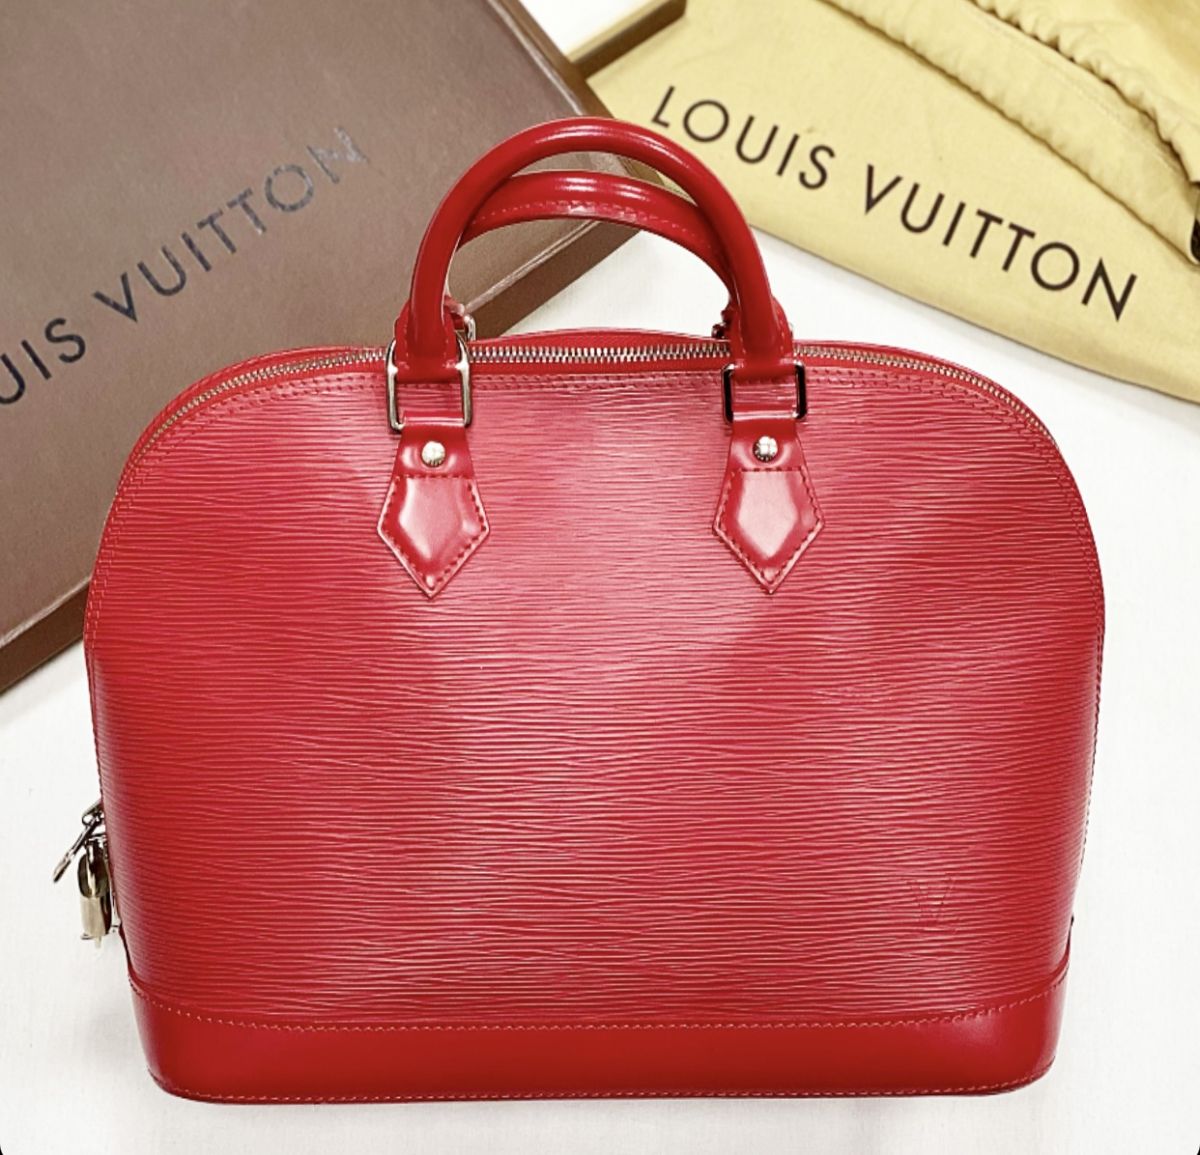 Сумка Louis Vuitton размер 30/25 цена 69 232 руб 